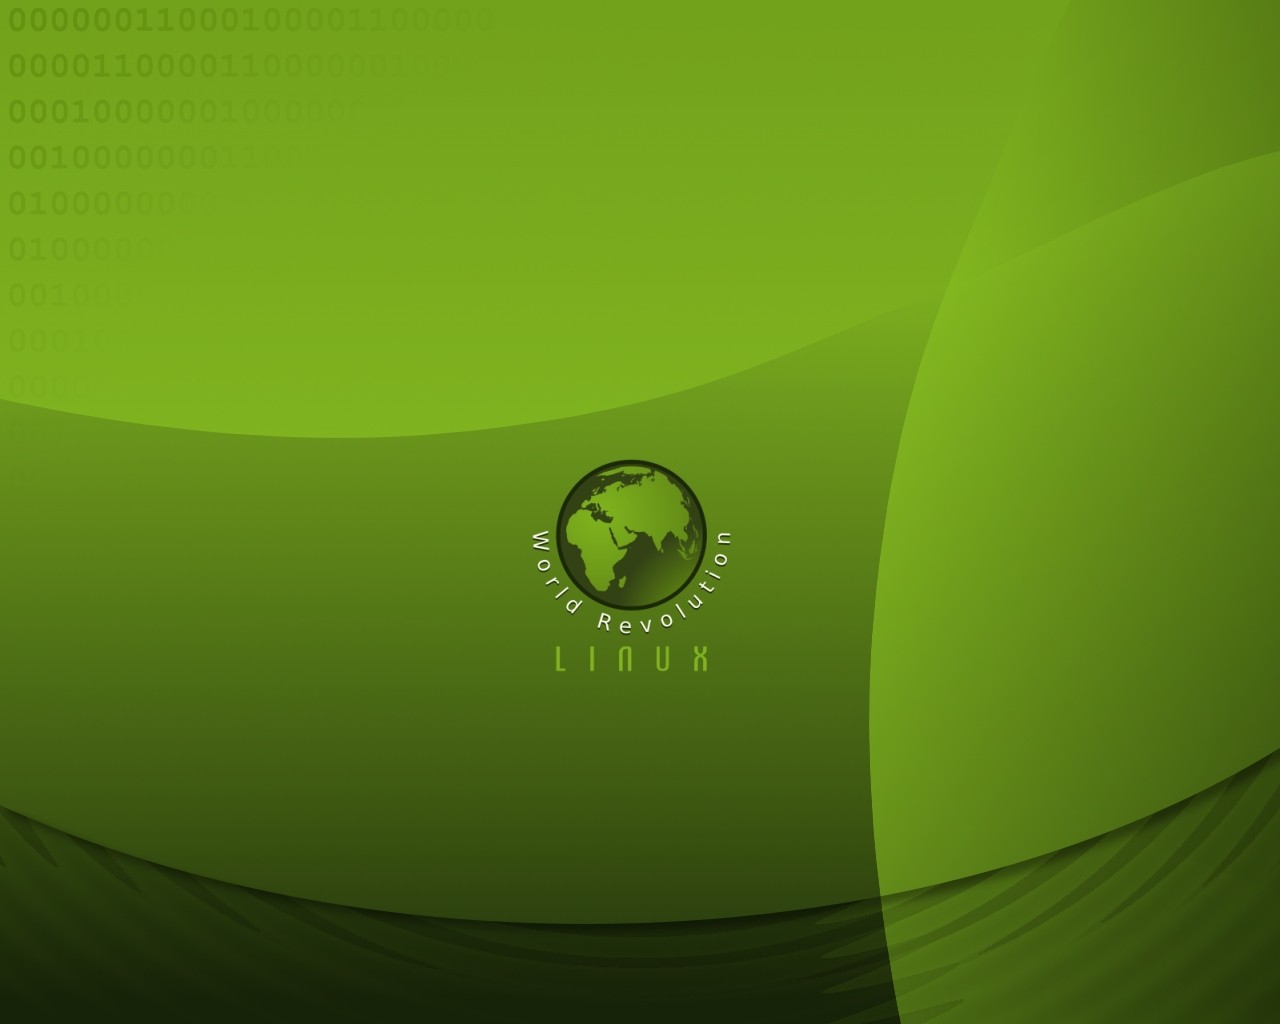 General 1280x1024 digital art Linux green background